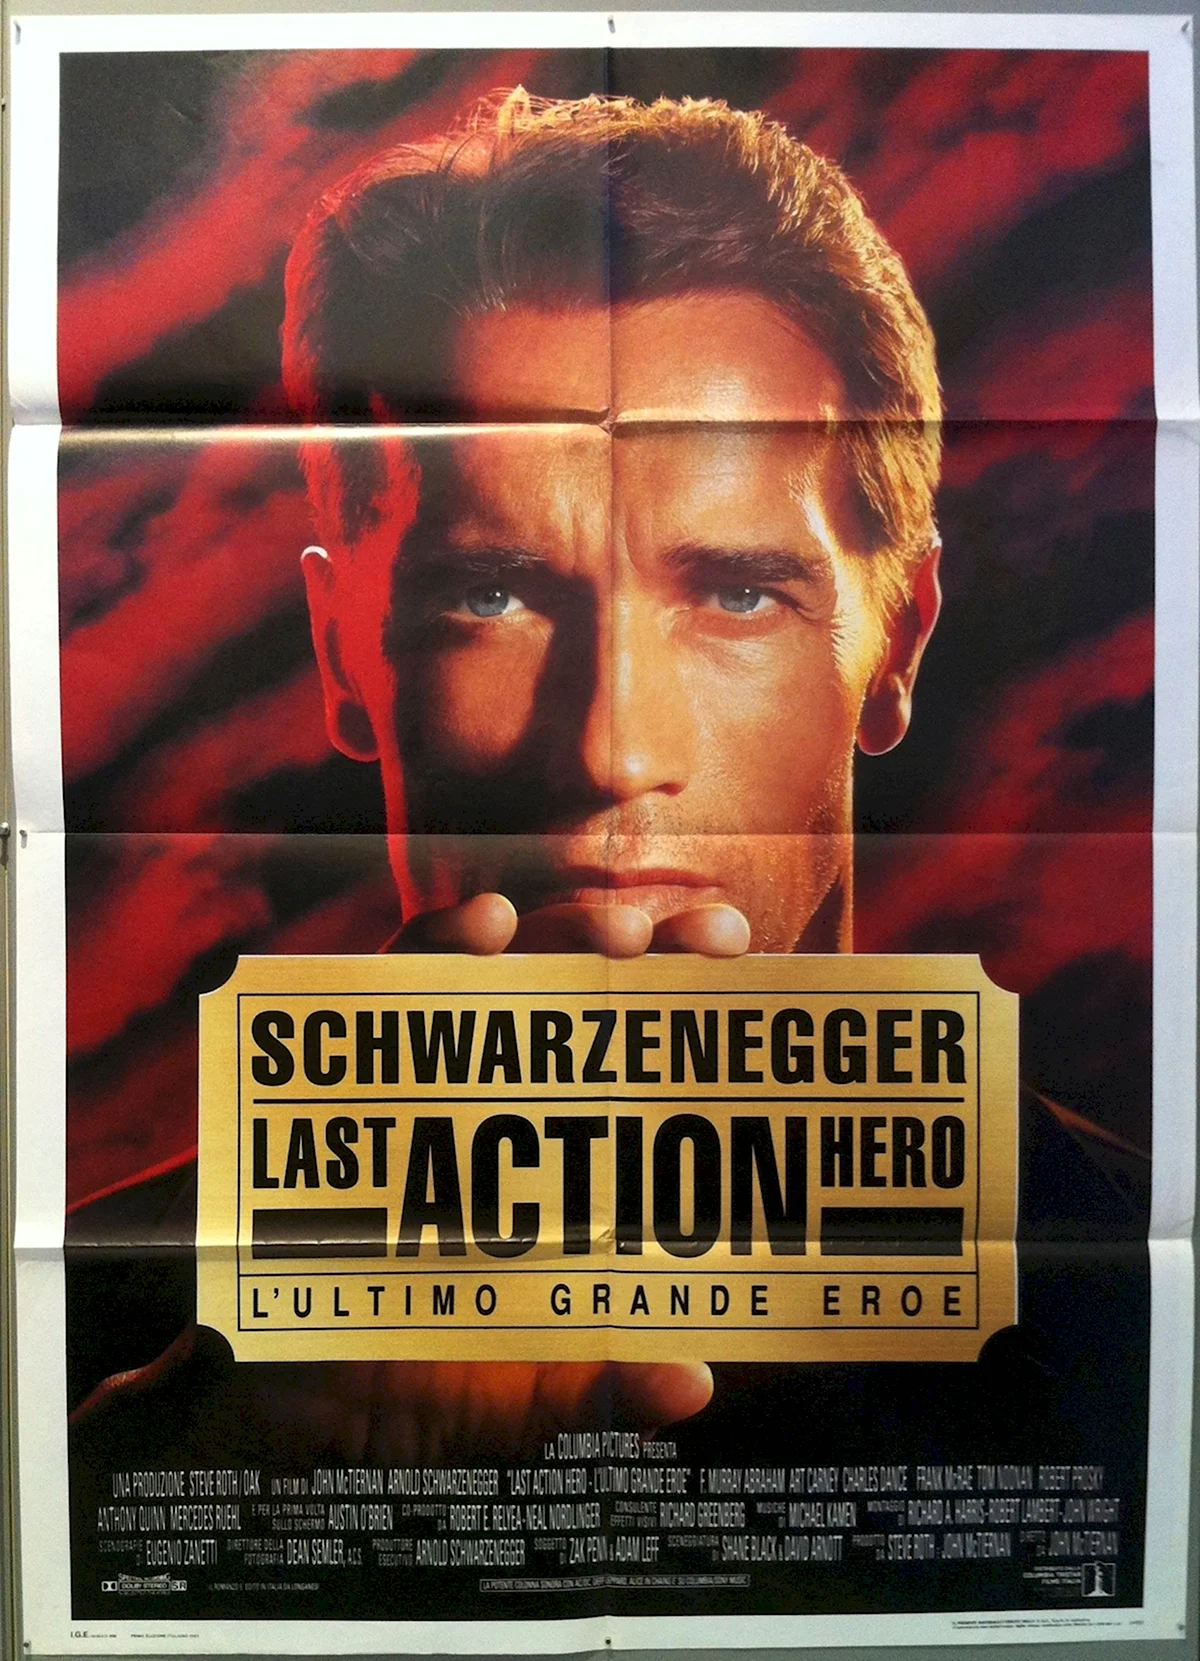 The last Cinema Hero poster